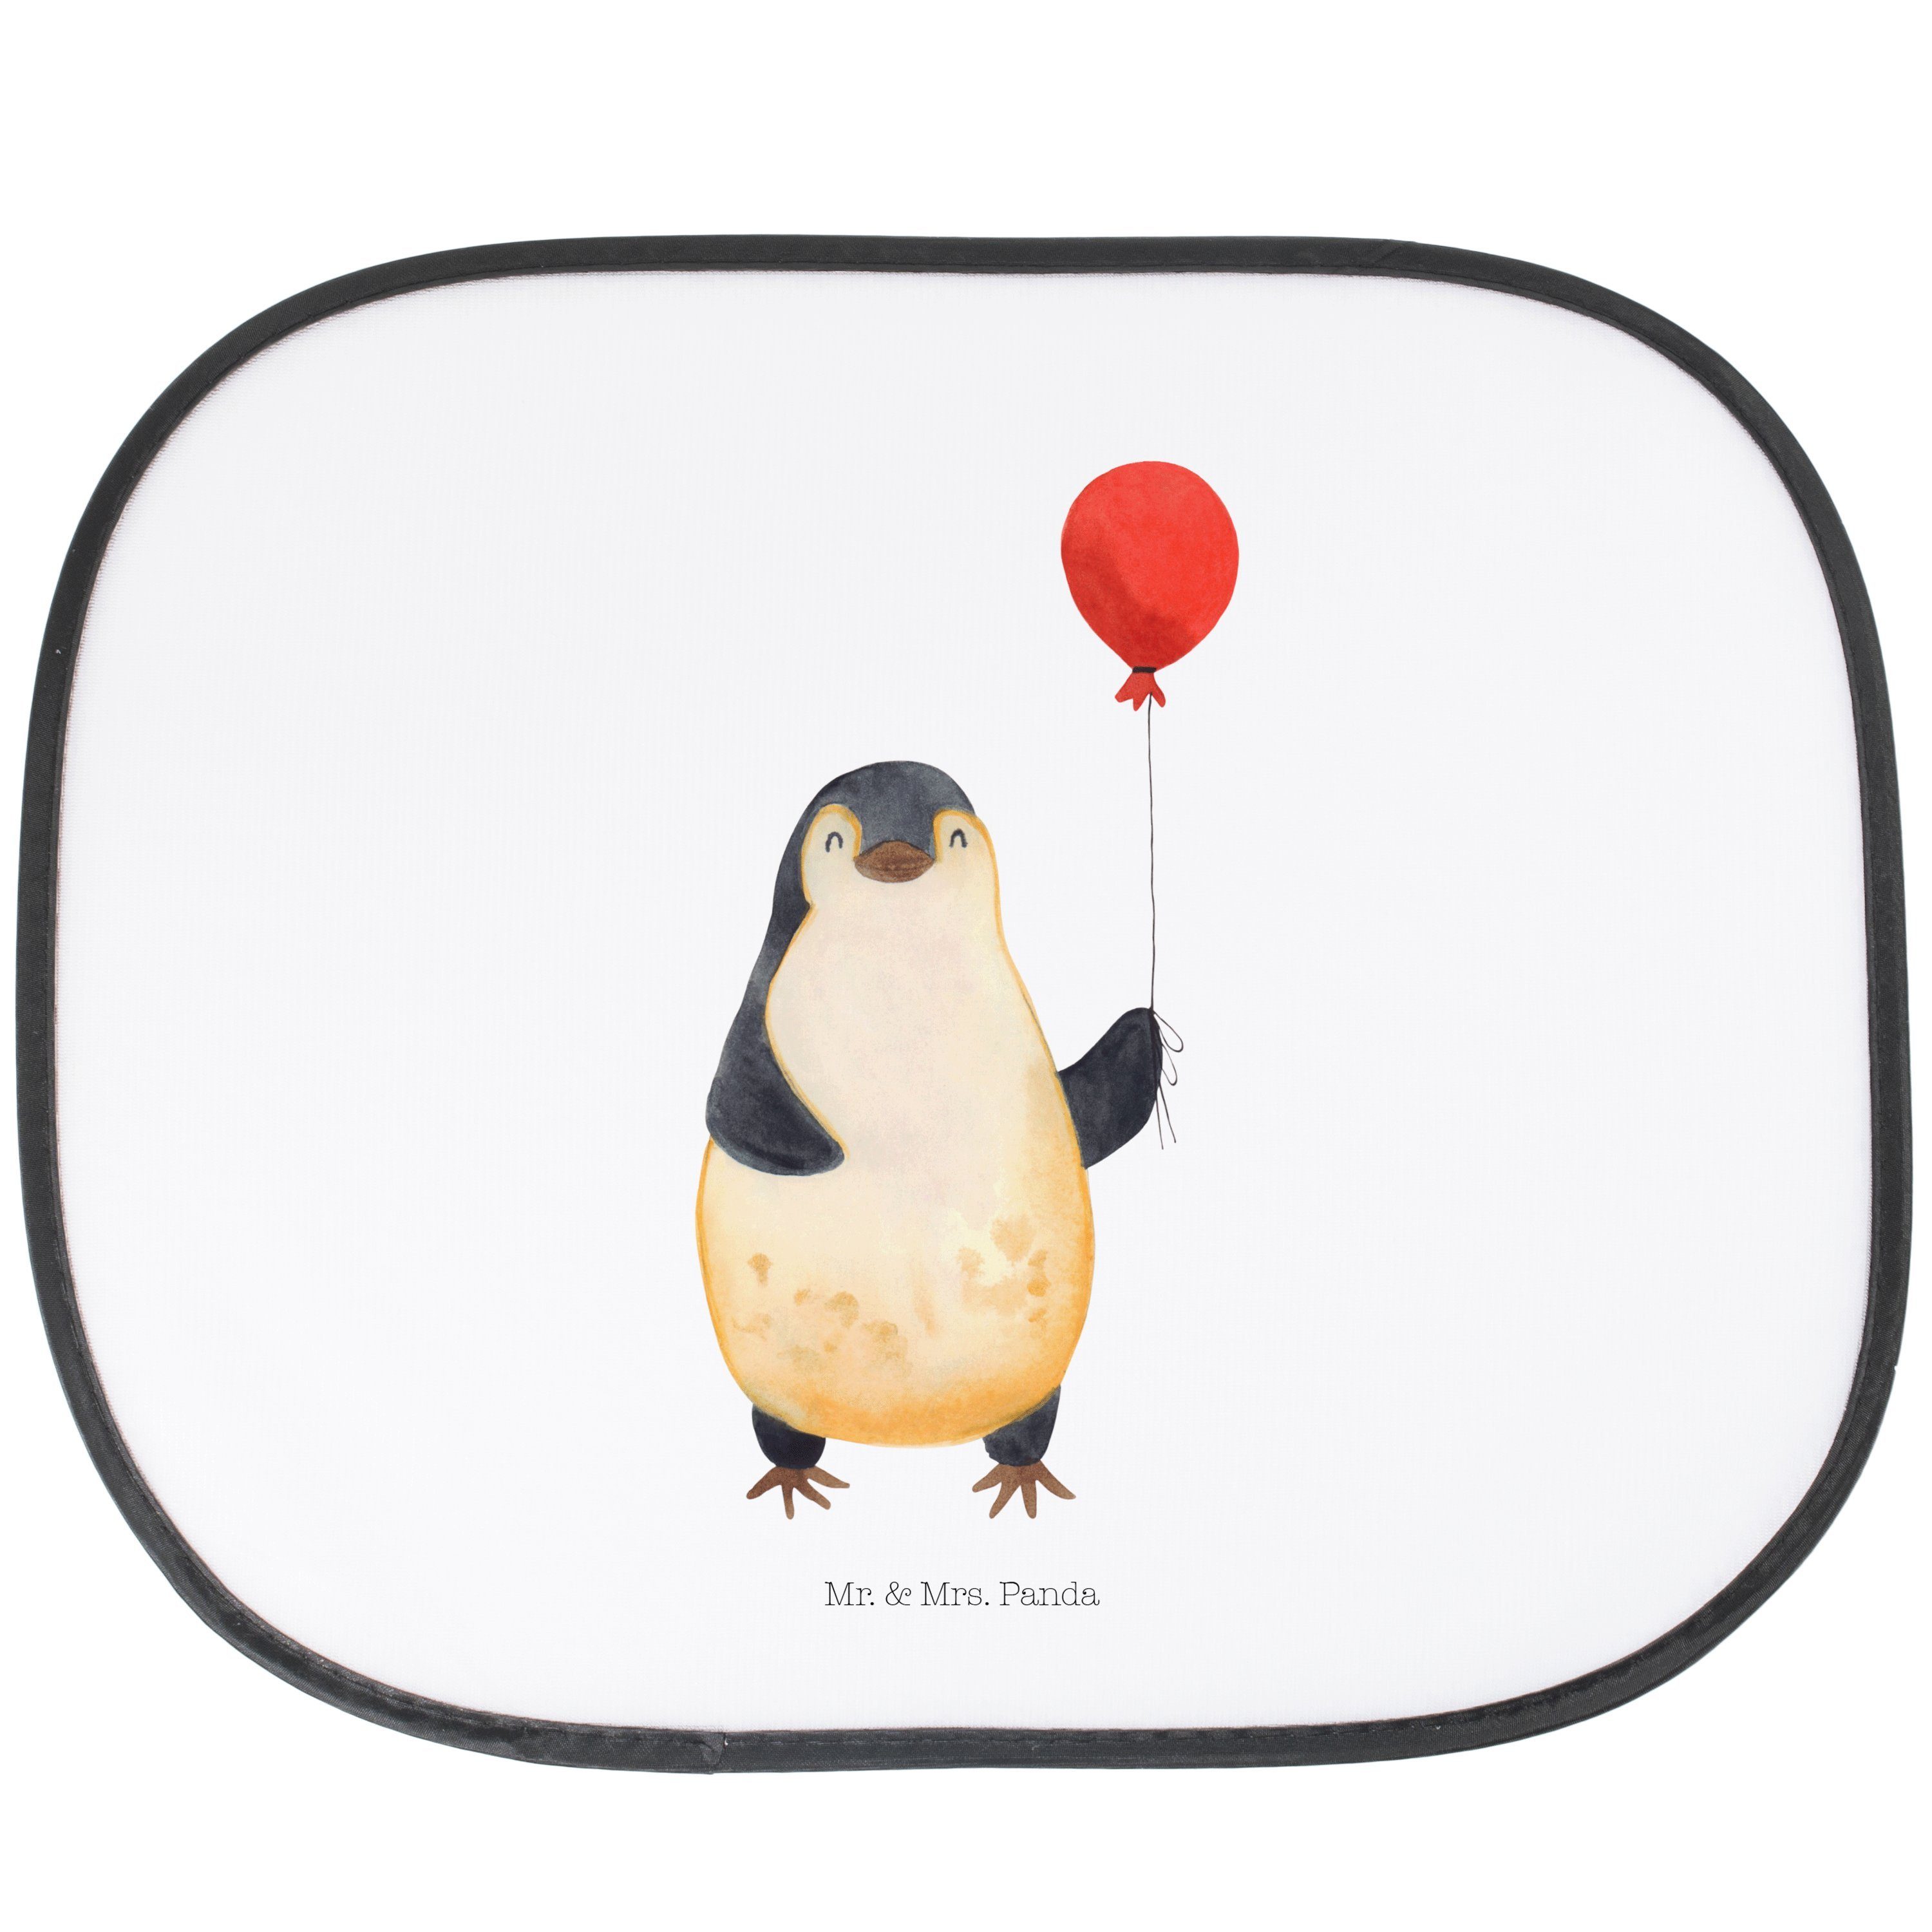 Sonnenschutz Pinguin Luftballon - Weiß - Geschenk, Sonnenschutz Kinder, Sonnenblen, Mr. & Mrs. Panda, Seidenmatt